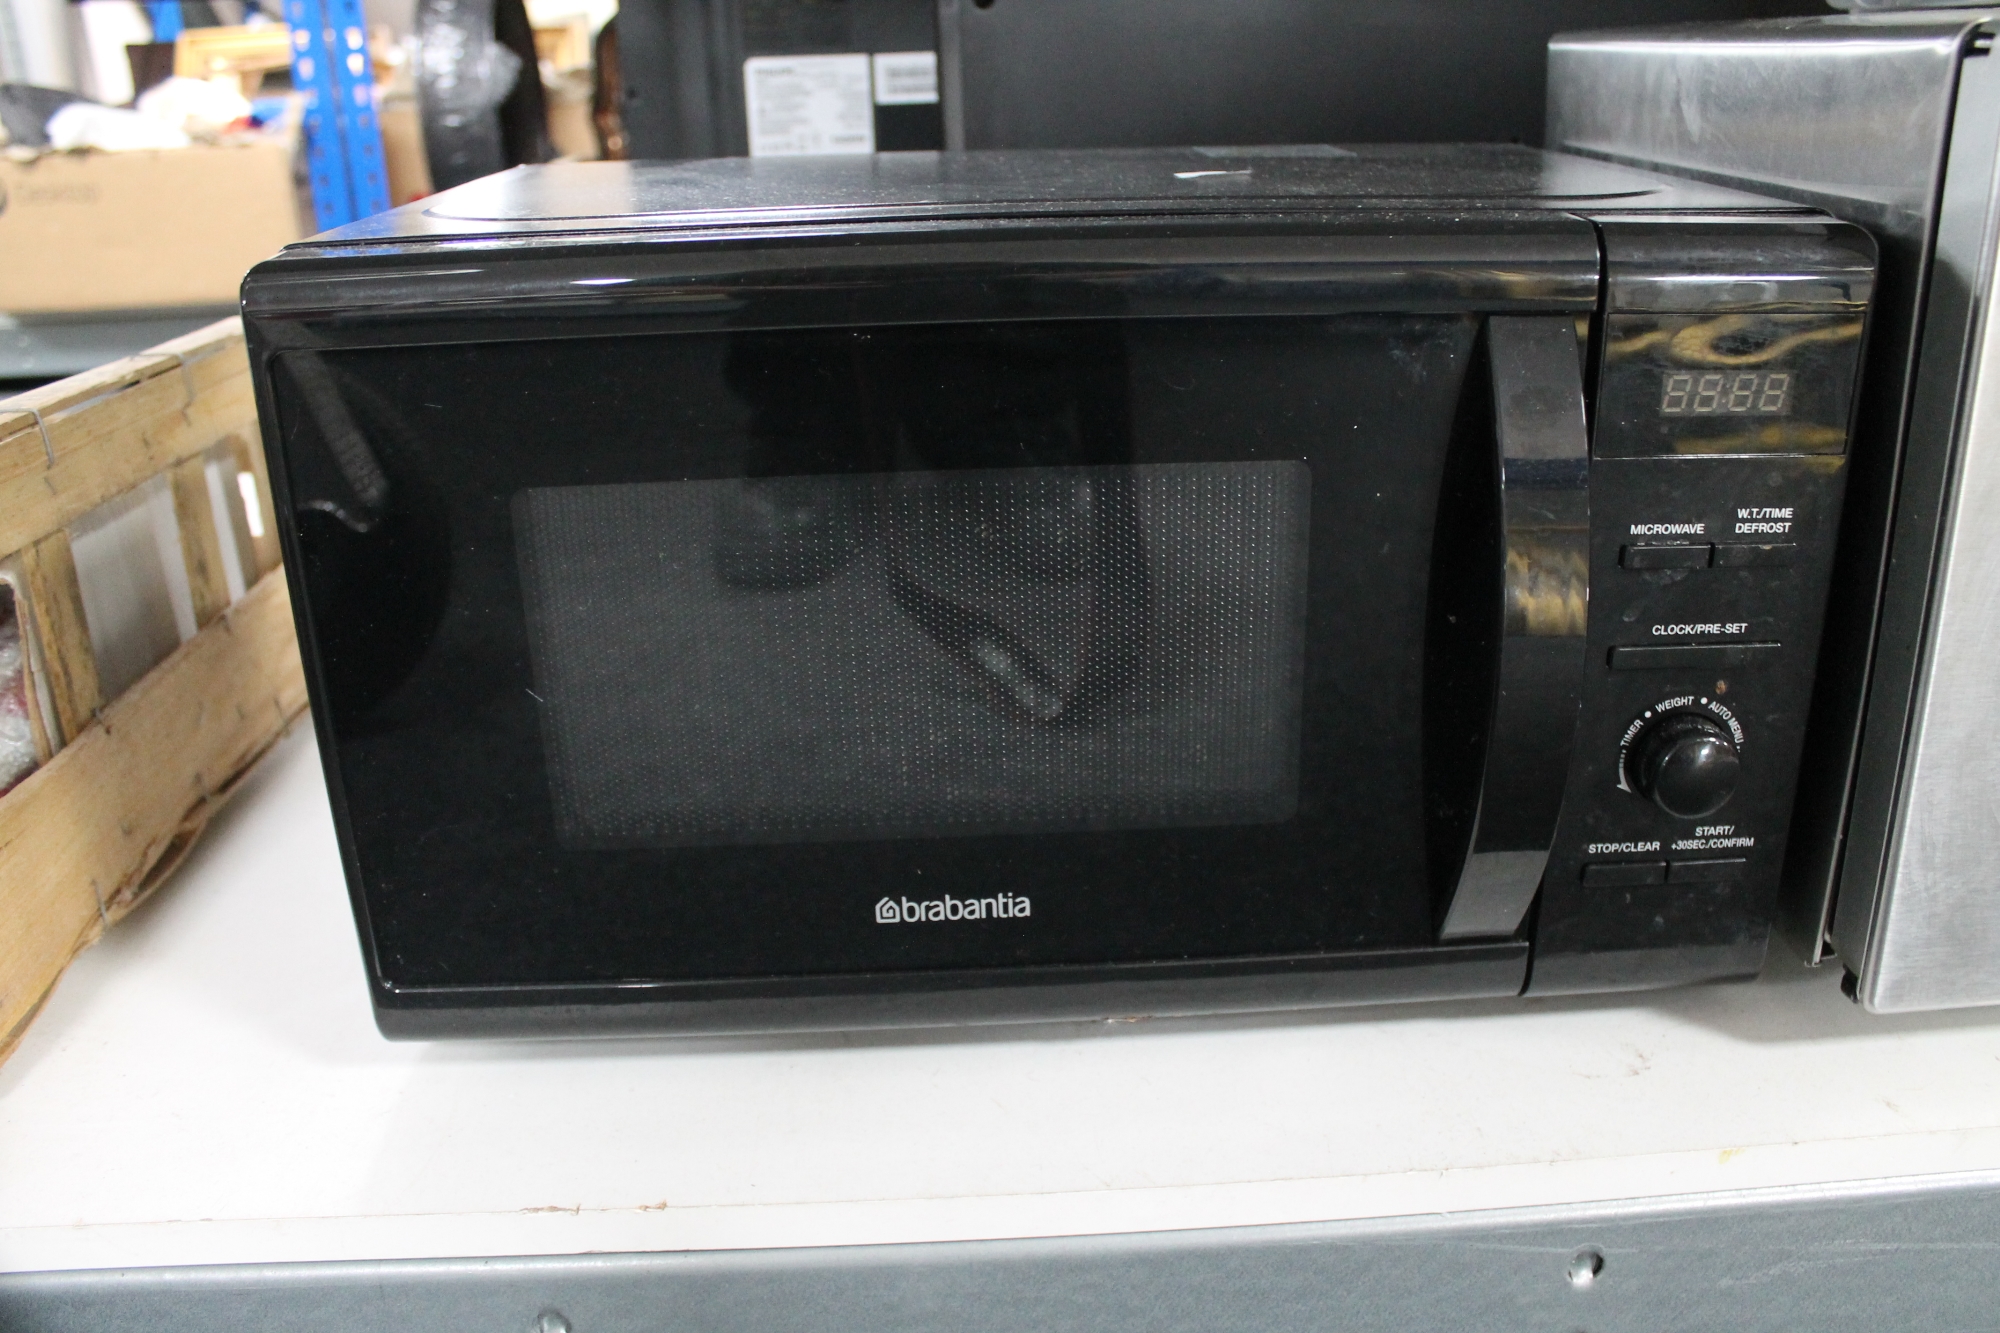 A Brabantia microwave